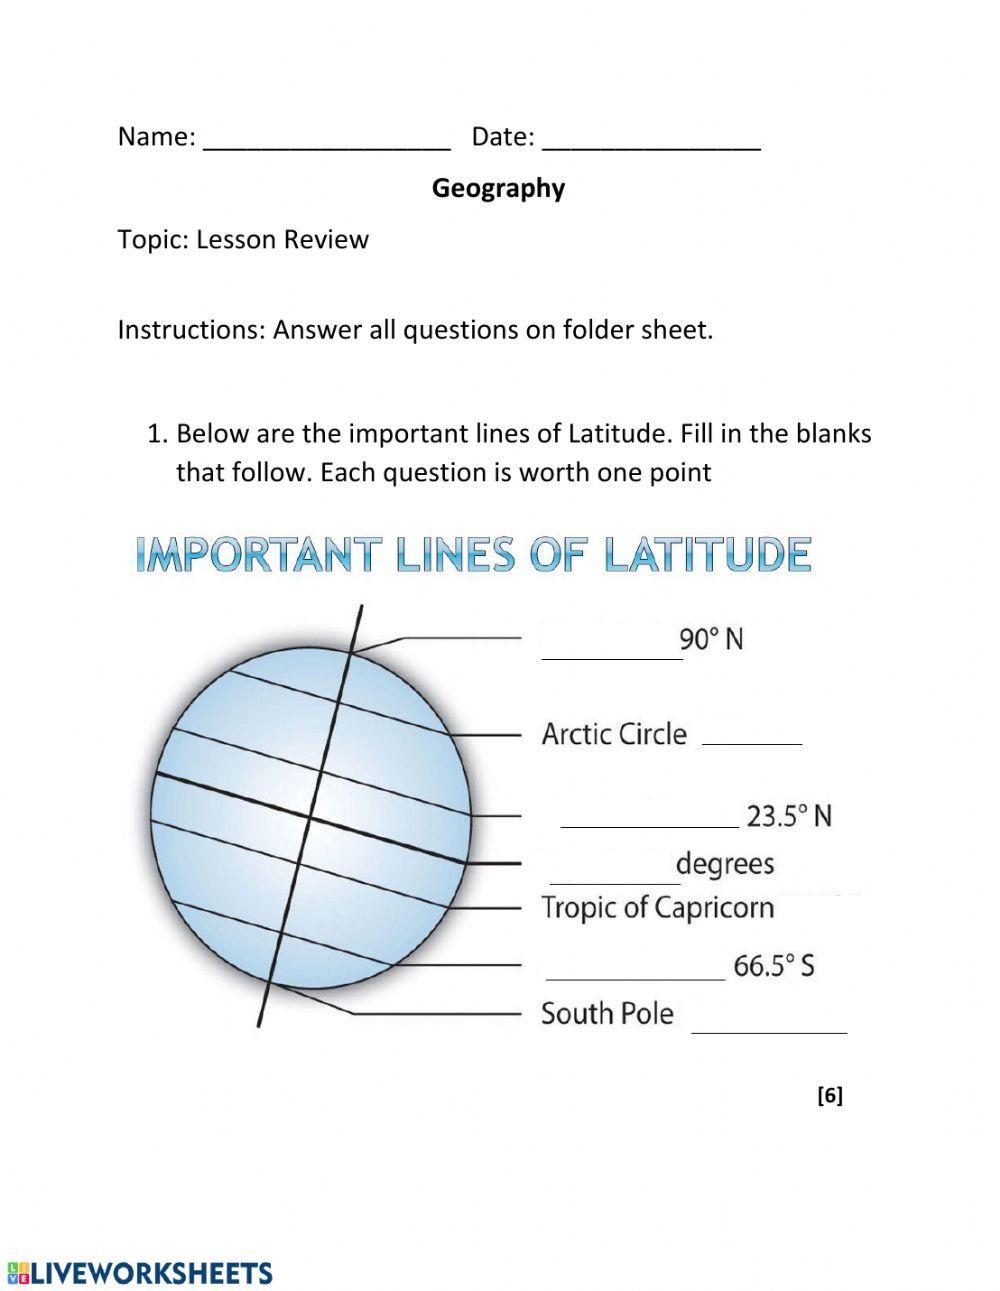 Important Latitude and Longitude Lines